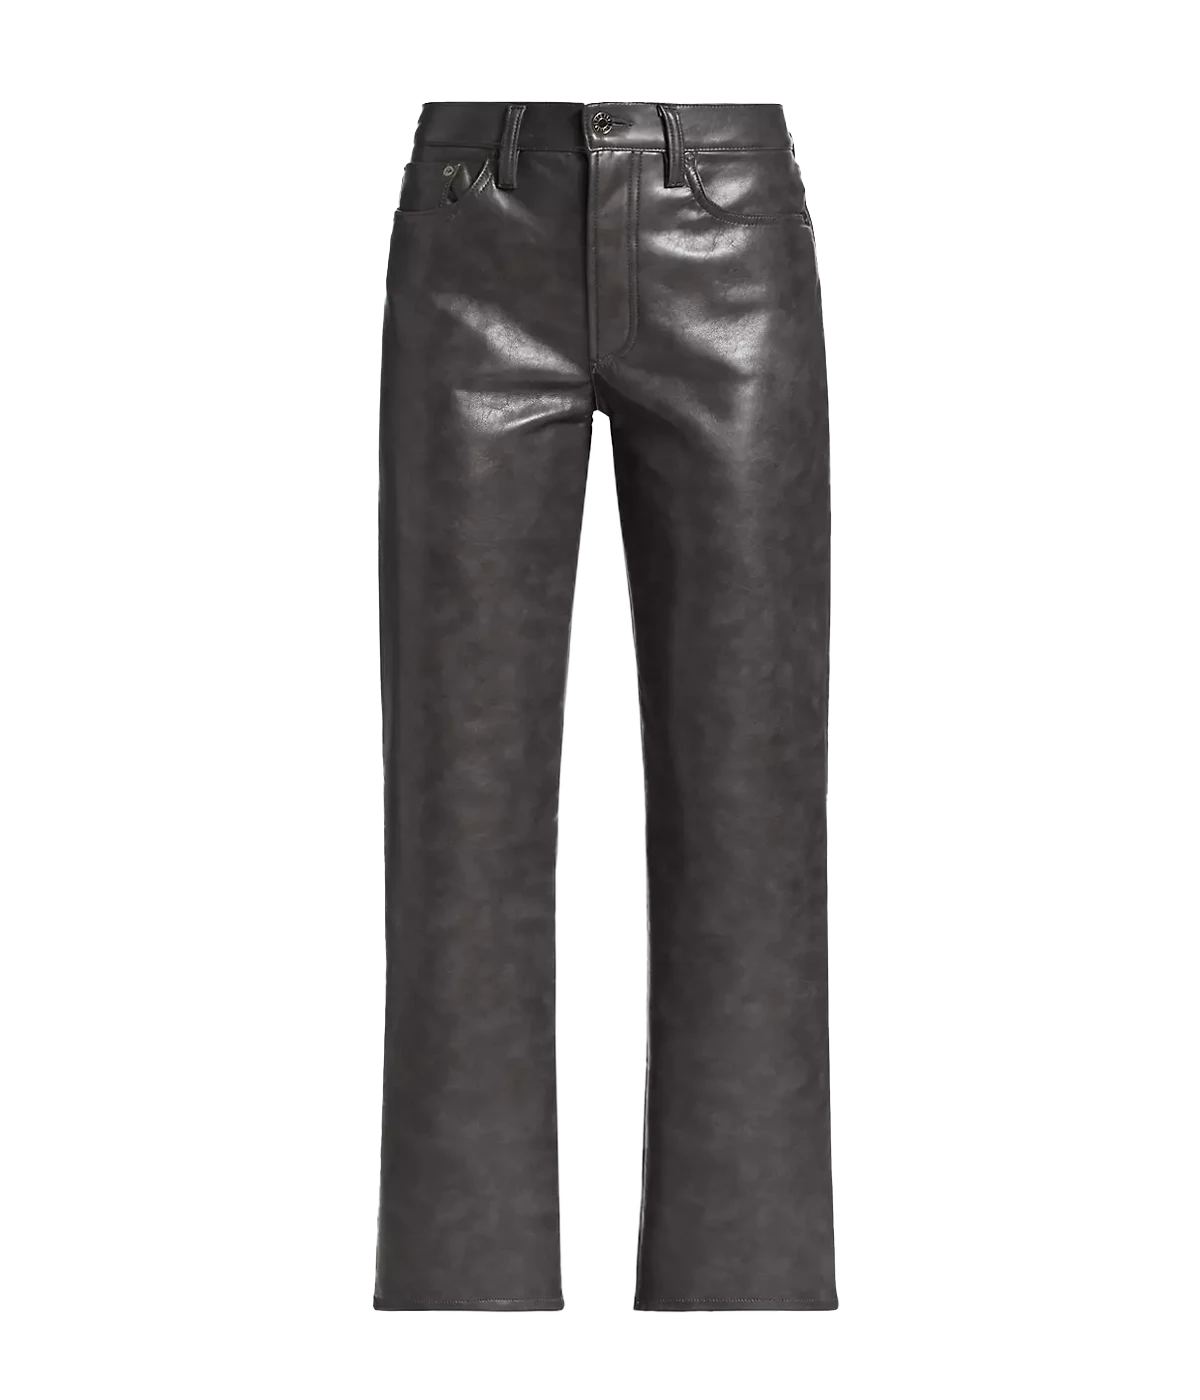 Sloane Leather Blend Pants in Smoke